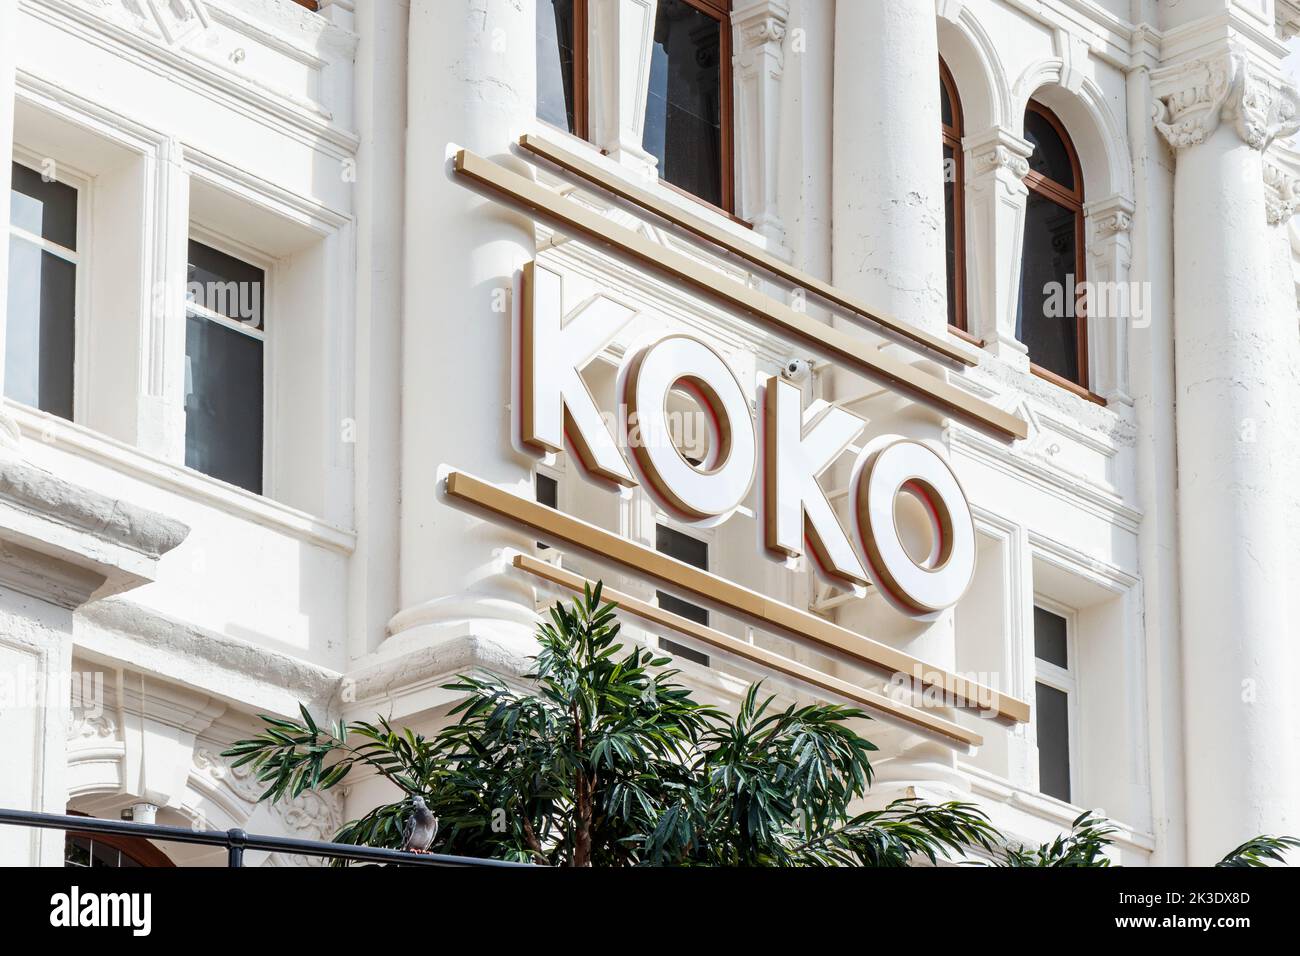 Koko, previously The Music Machine and Camden Palace, a concert venue at Mornington Crescent in Camden, London UK. Stock Photo